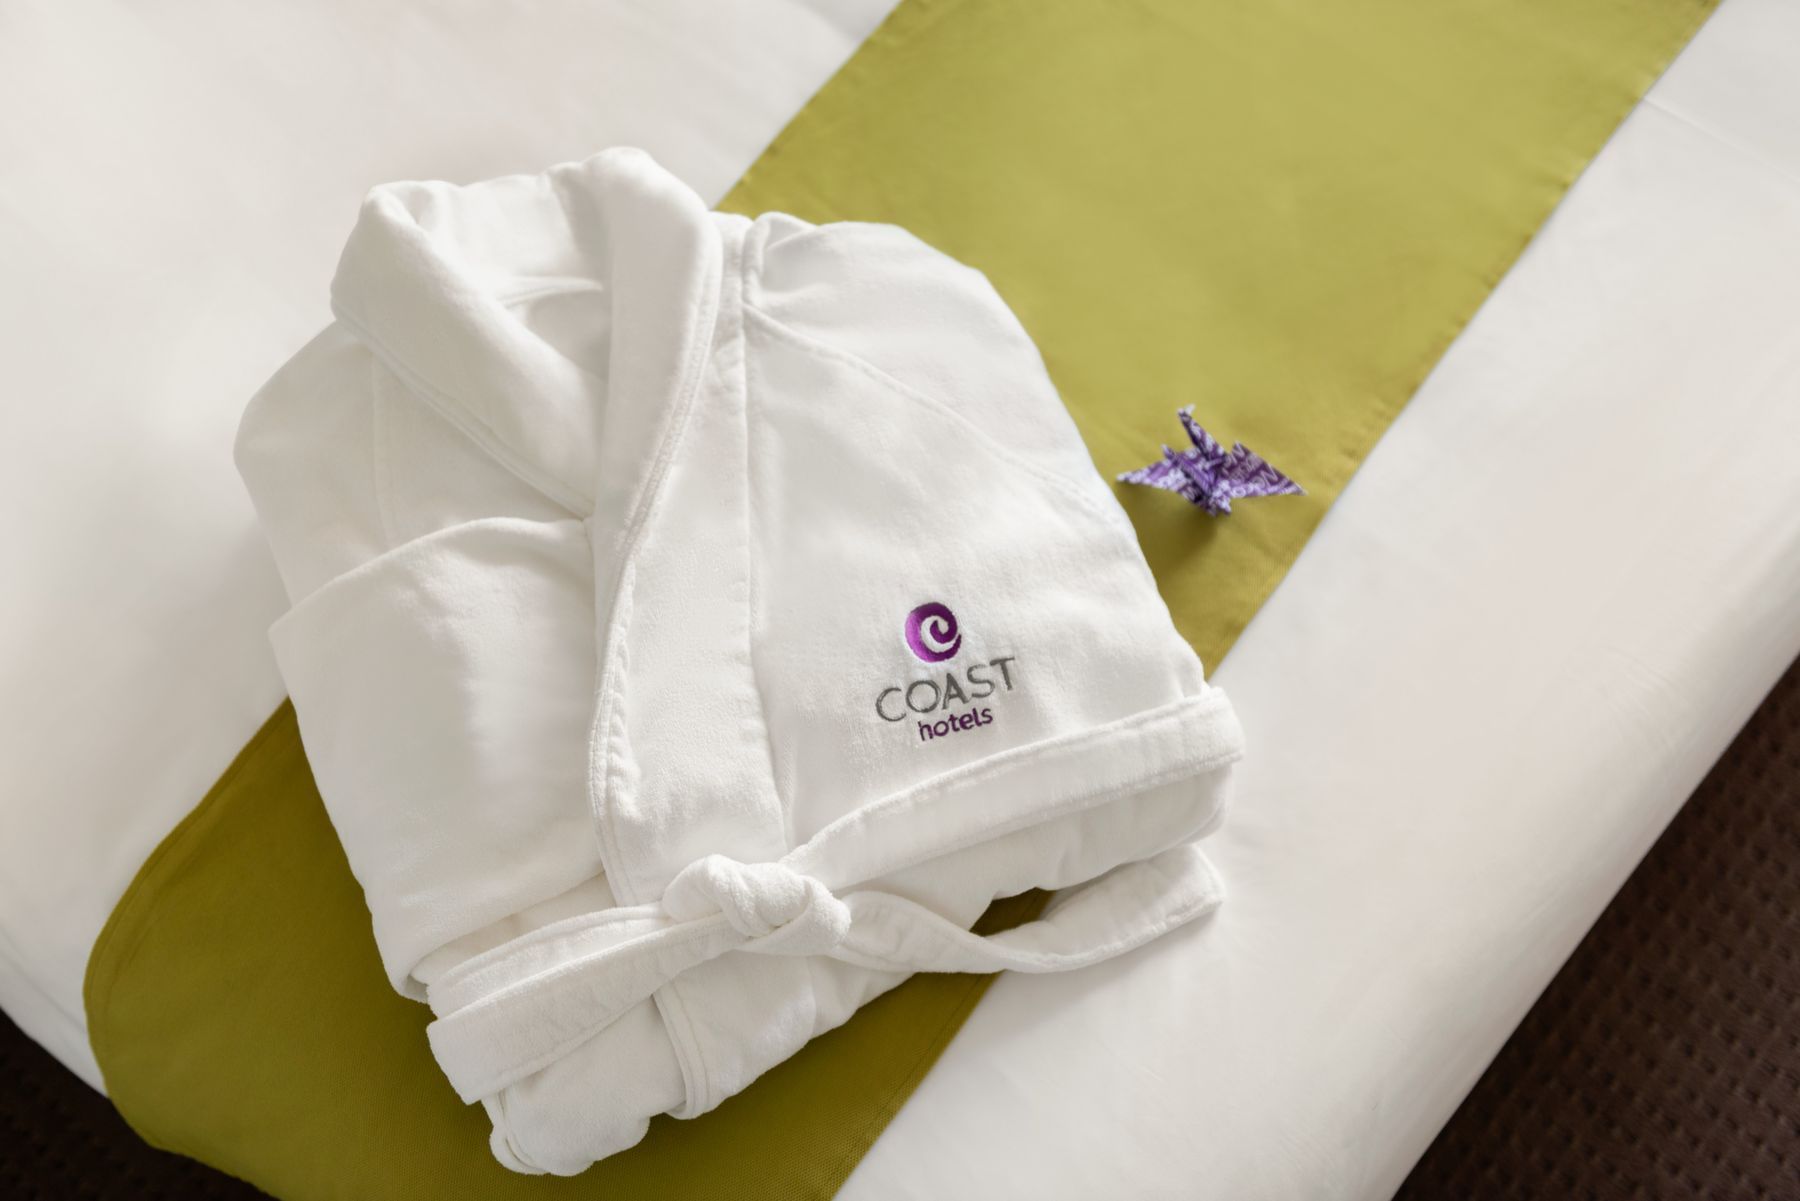 Robe with Coast Hotels logo on it